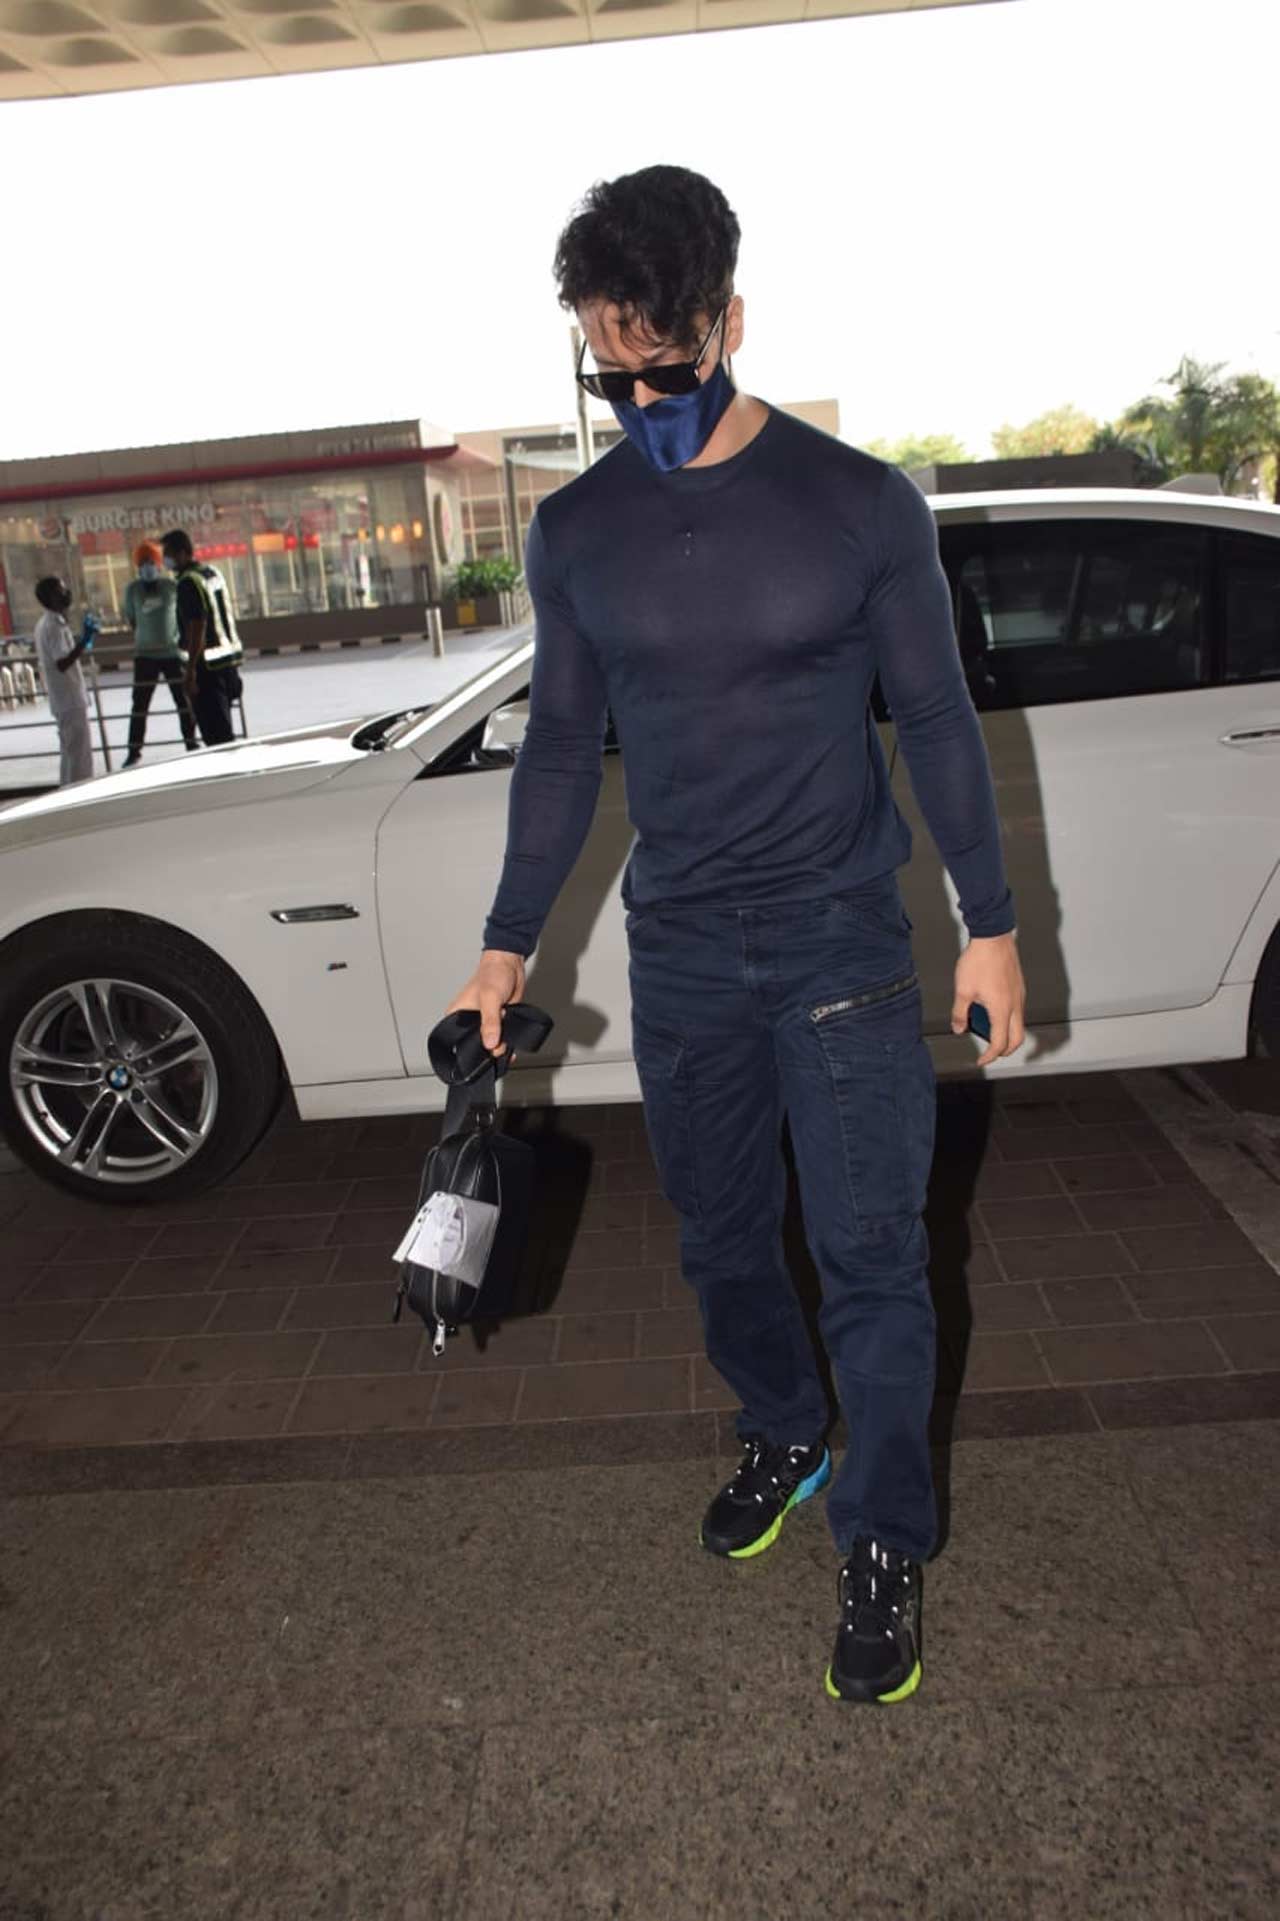 Airport Look: Ranbir Kapoor wears an expensive T-shirt once worn